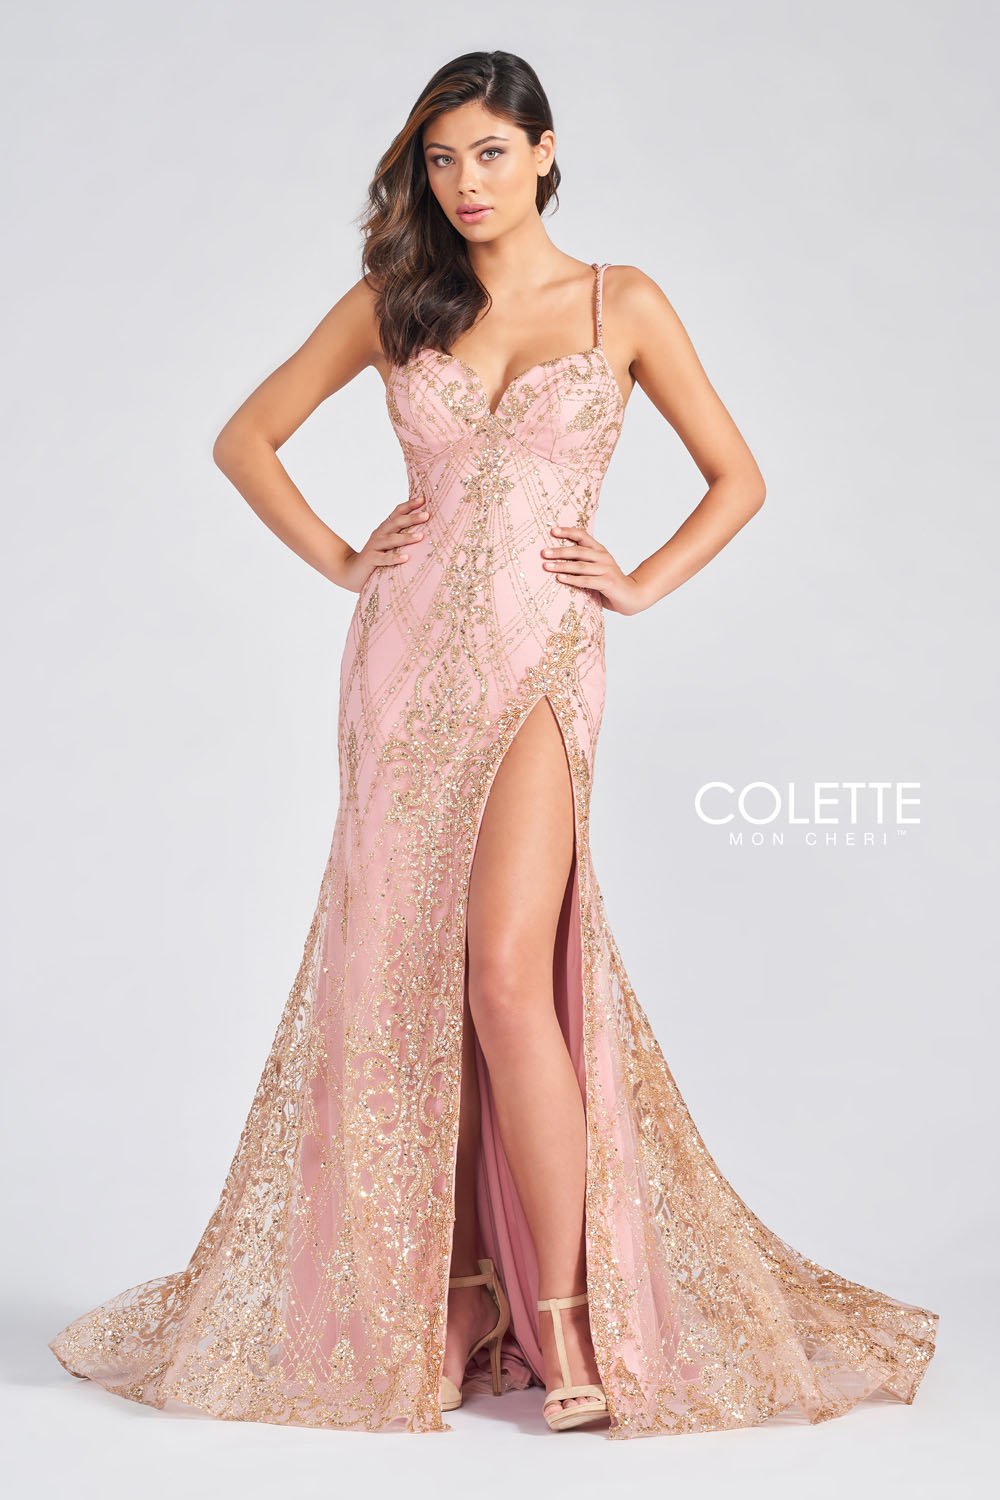 Colette CL12278 Rose Gold prom dresses.  Rose Gold prom dresses image by Colette.